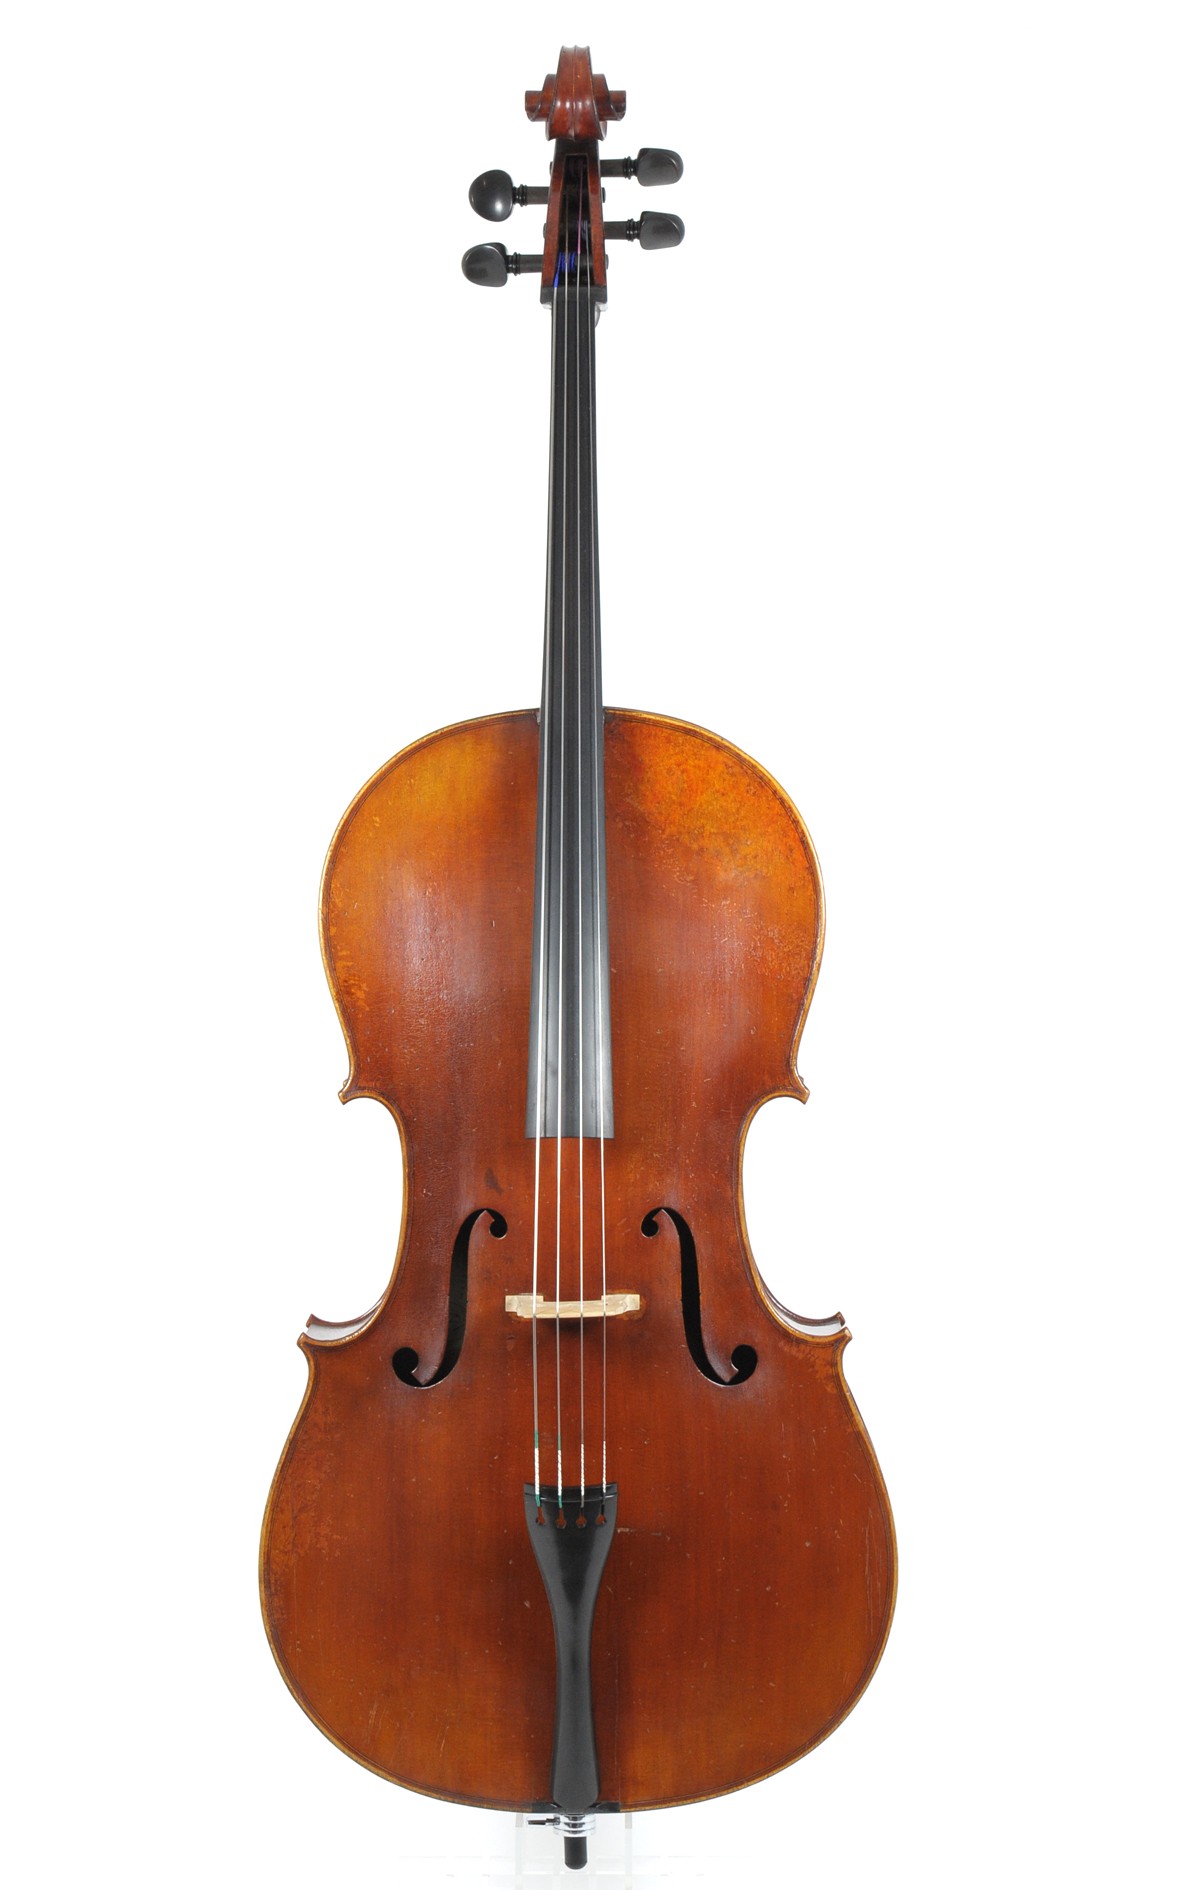 H. Emile Blondelet, cello 1924 - table